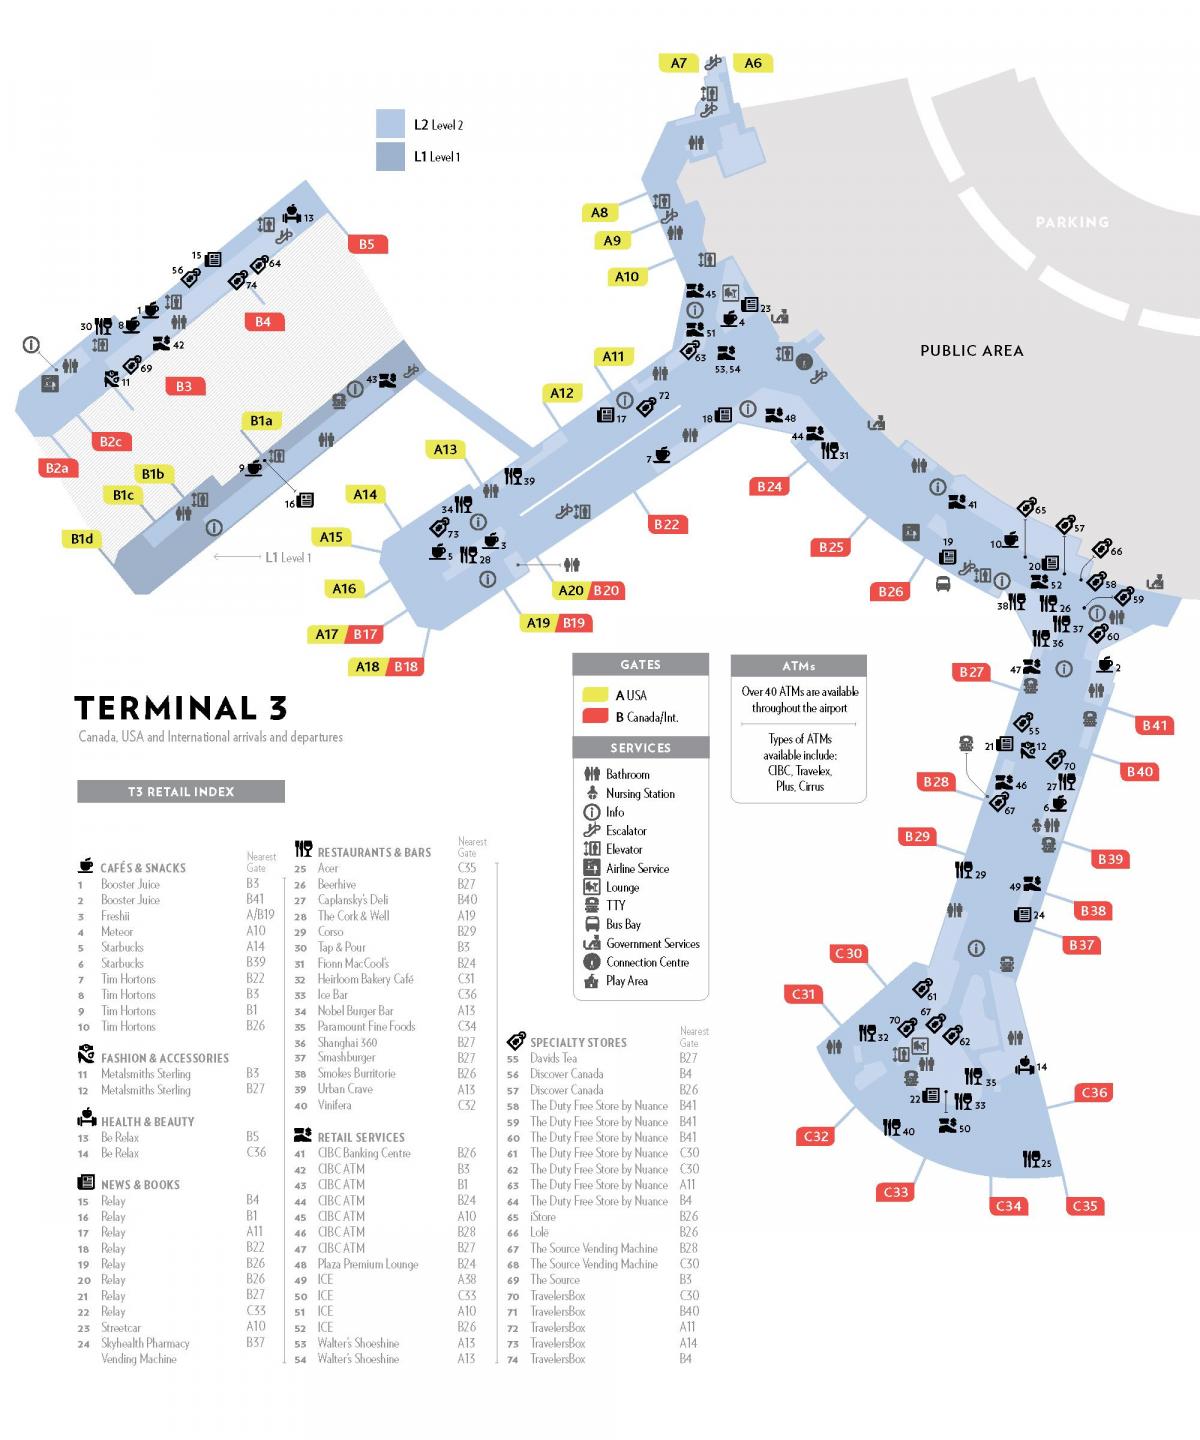 pearson de la terminal 3 del mapa